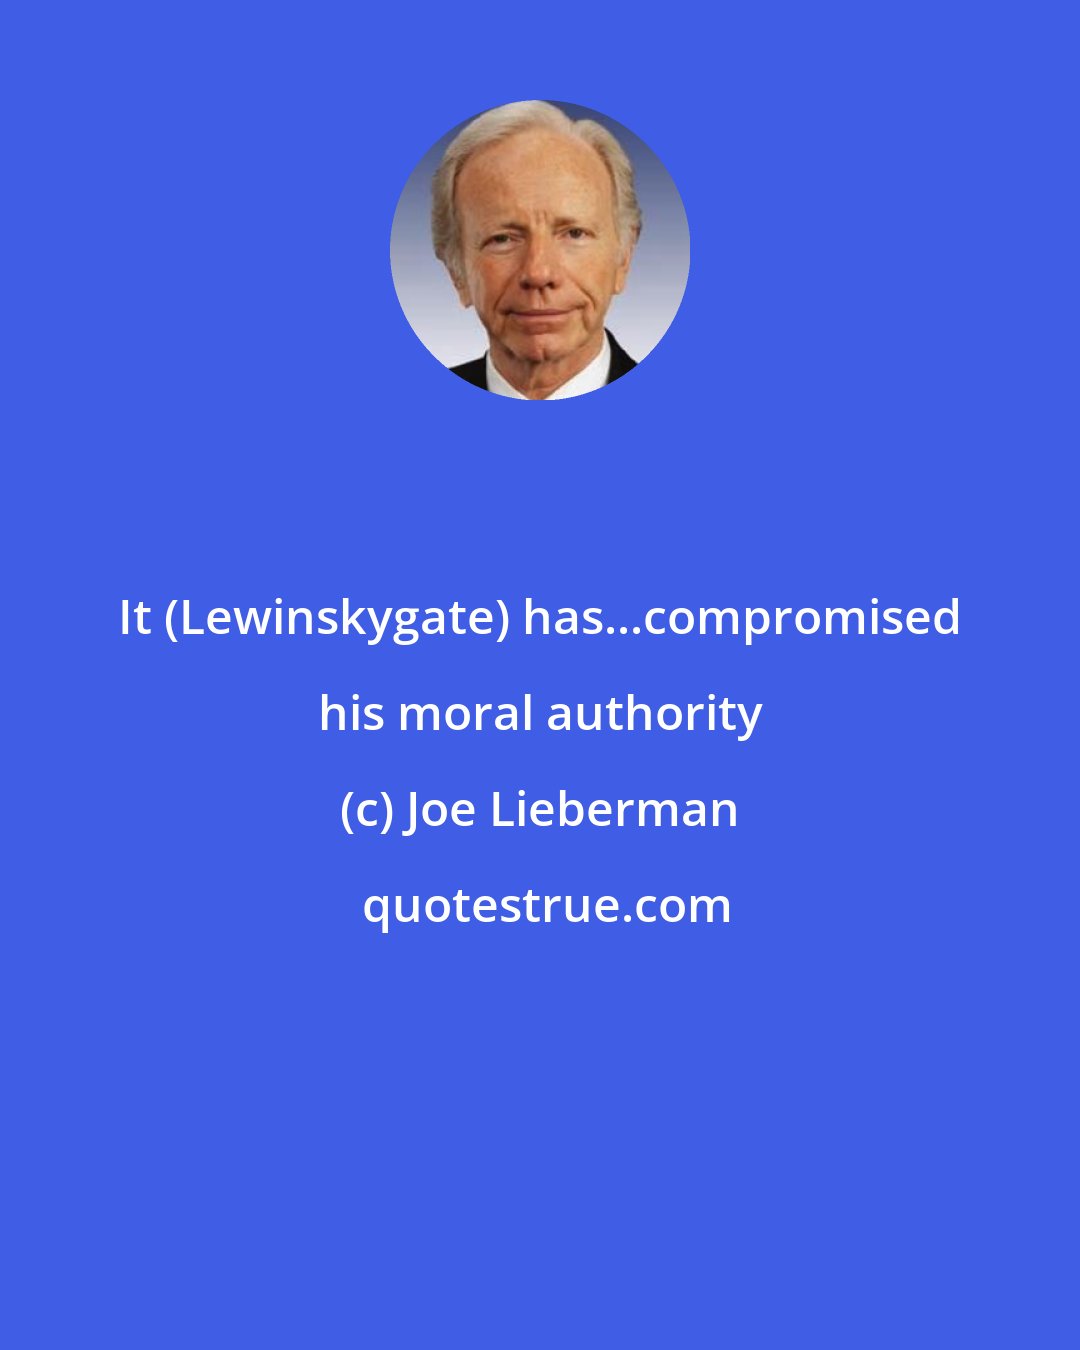 Joe Lieberman: It (Lewinskygate) has...compromised his moral authority